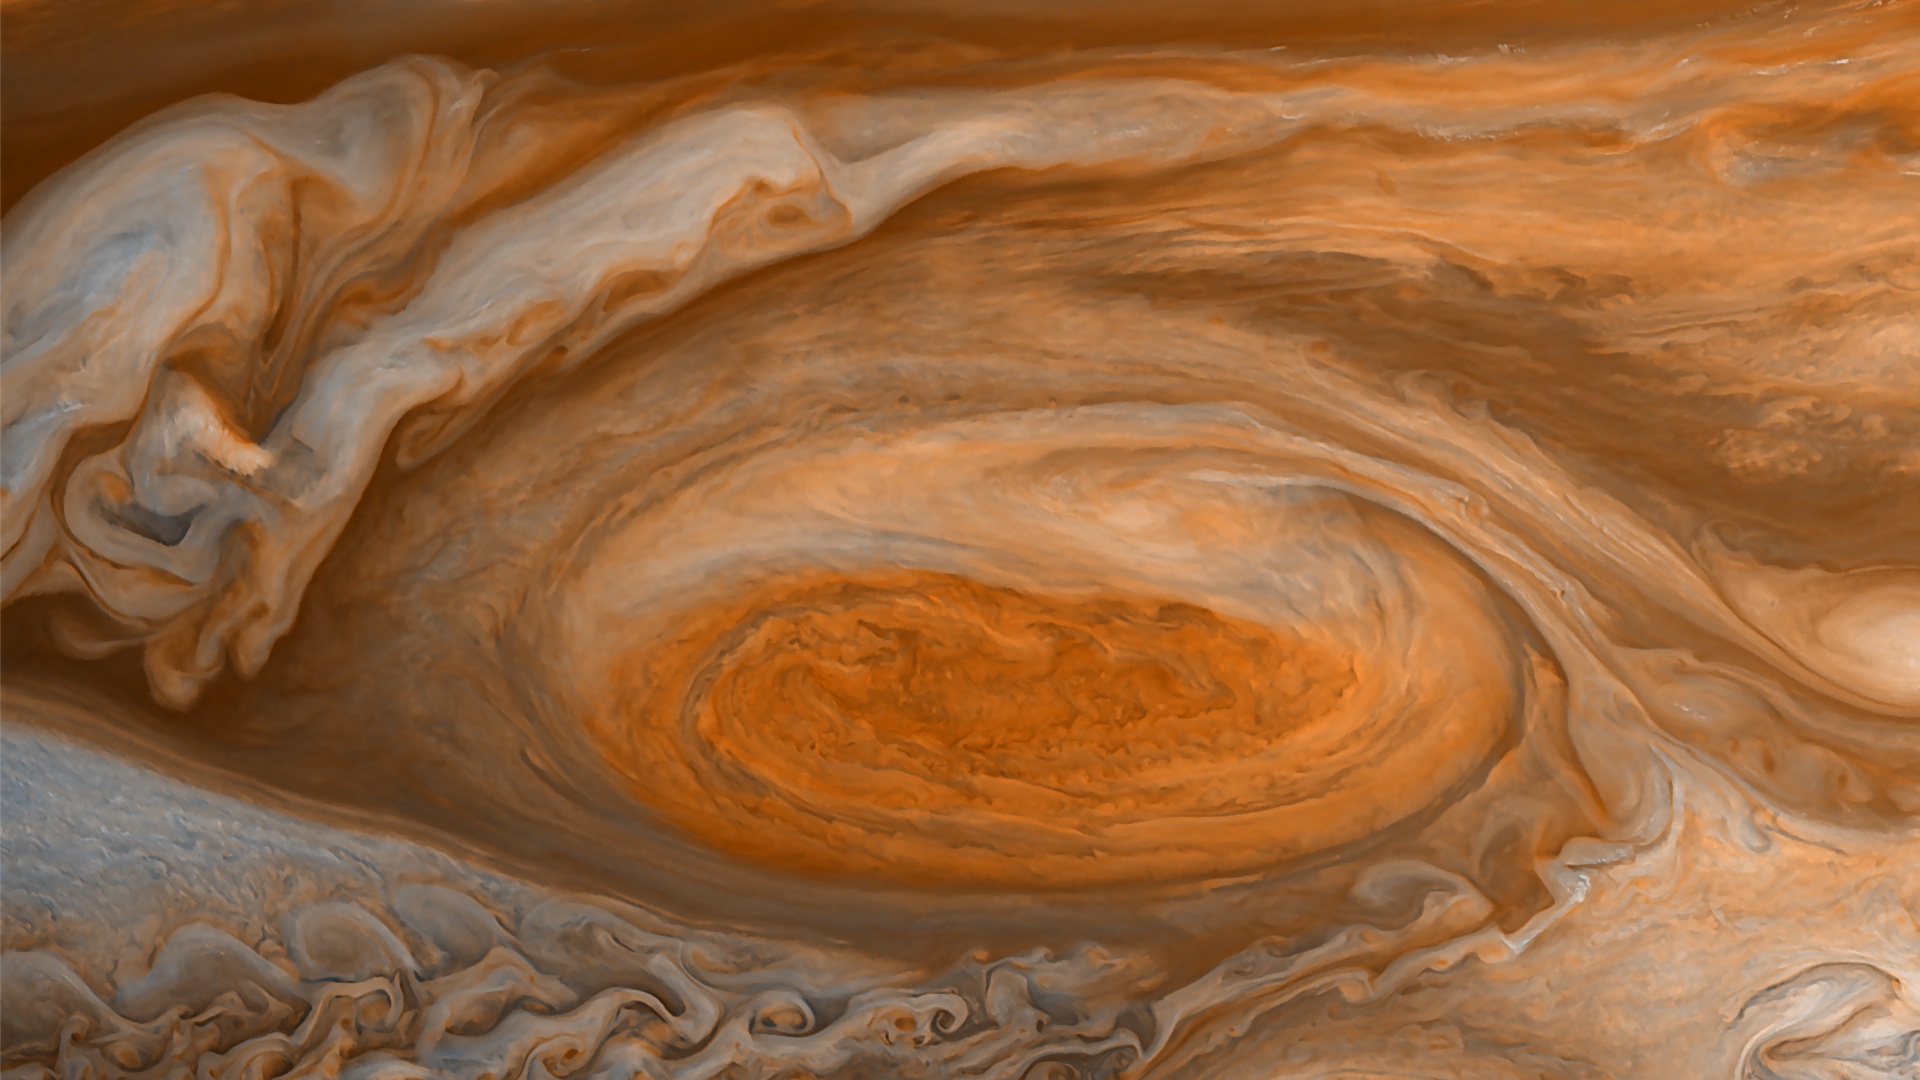 Top New Jupiter Backgrounds - Great Red Spot 4k - HD Wallpaper 